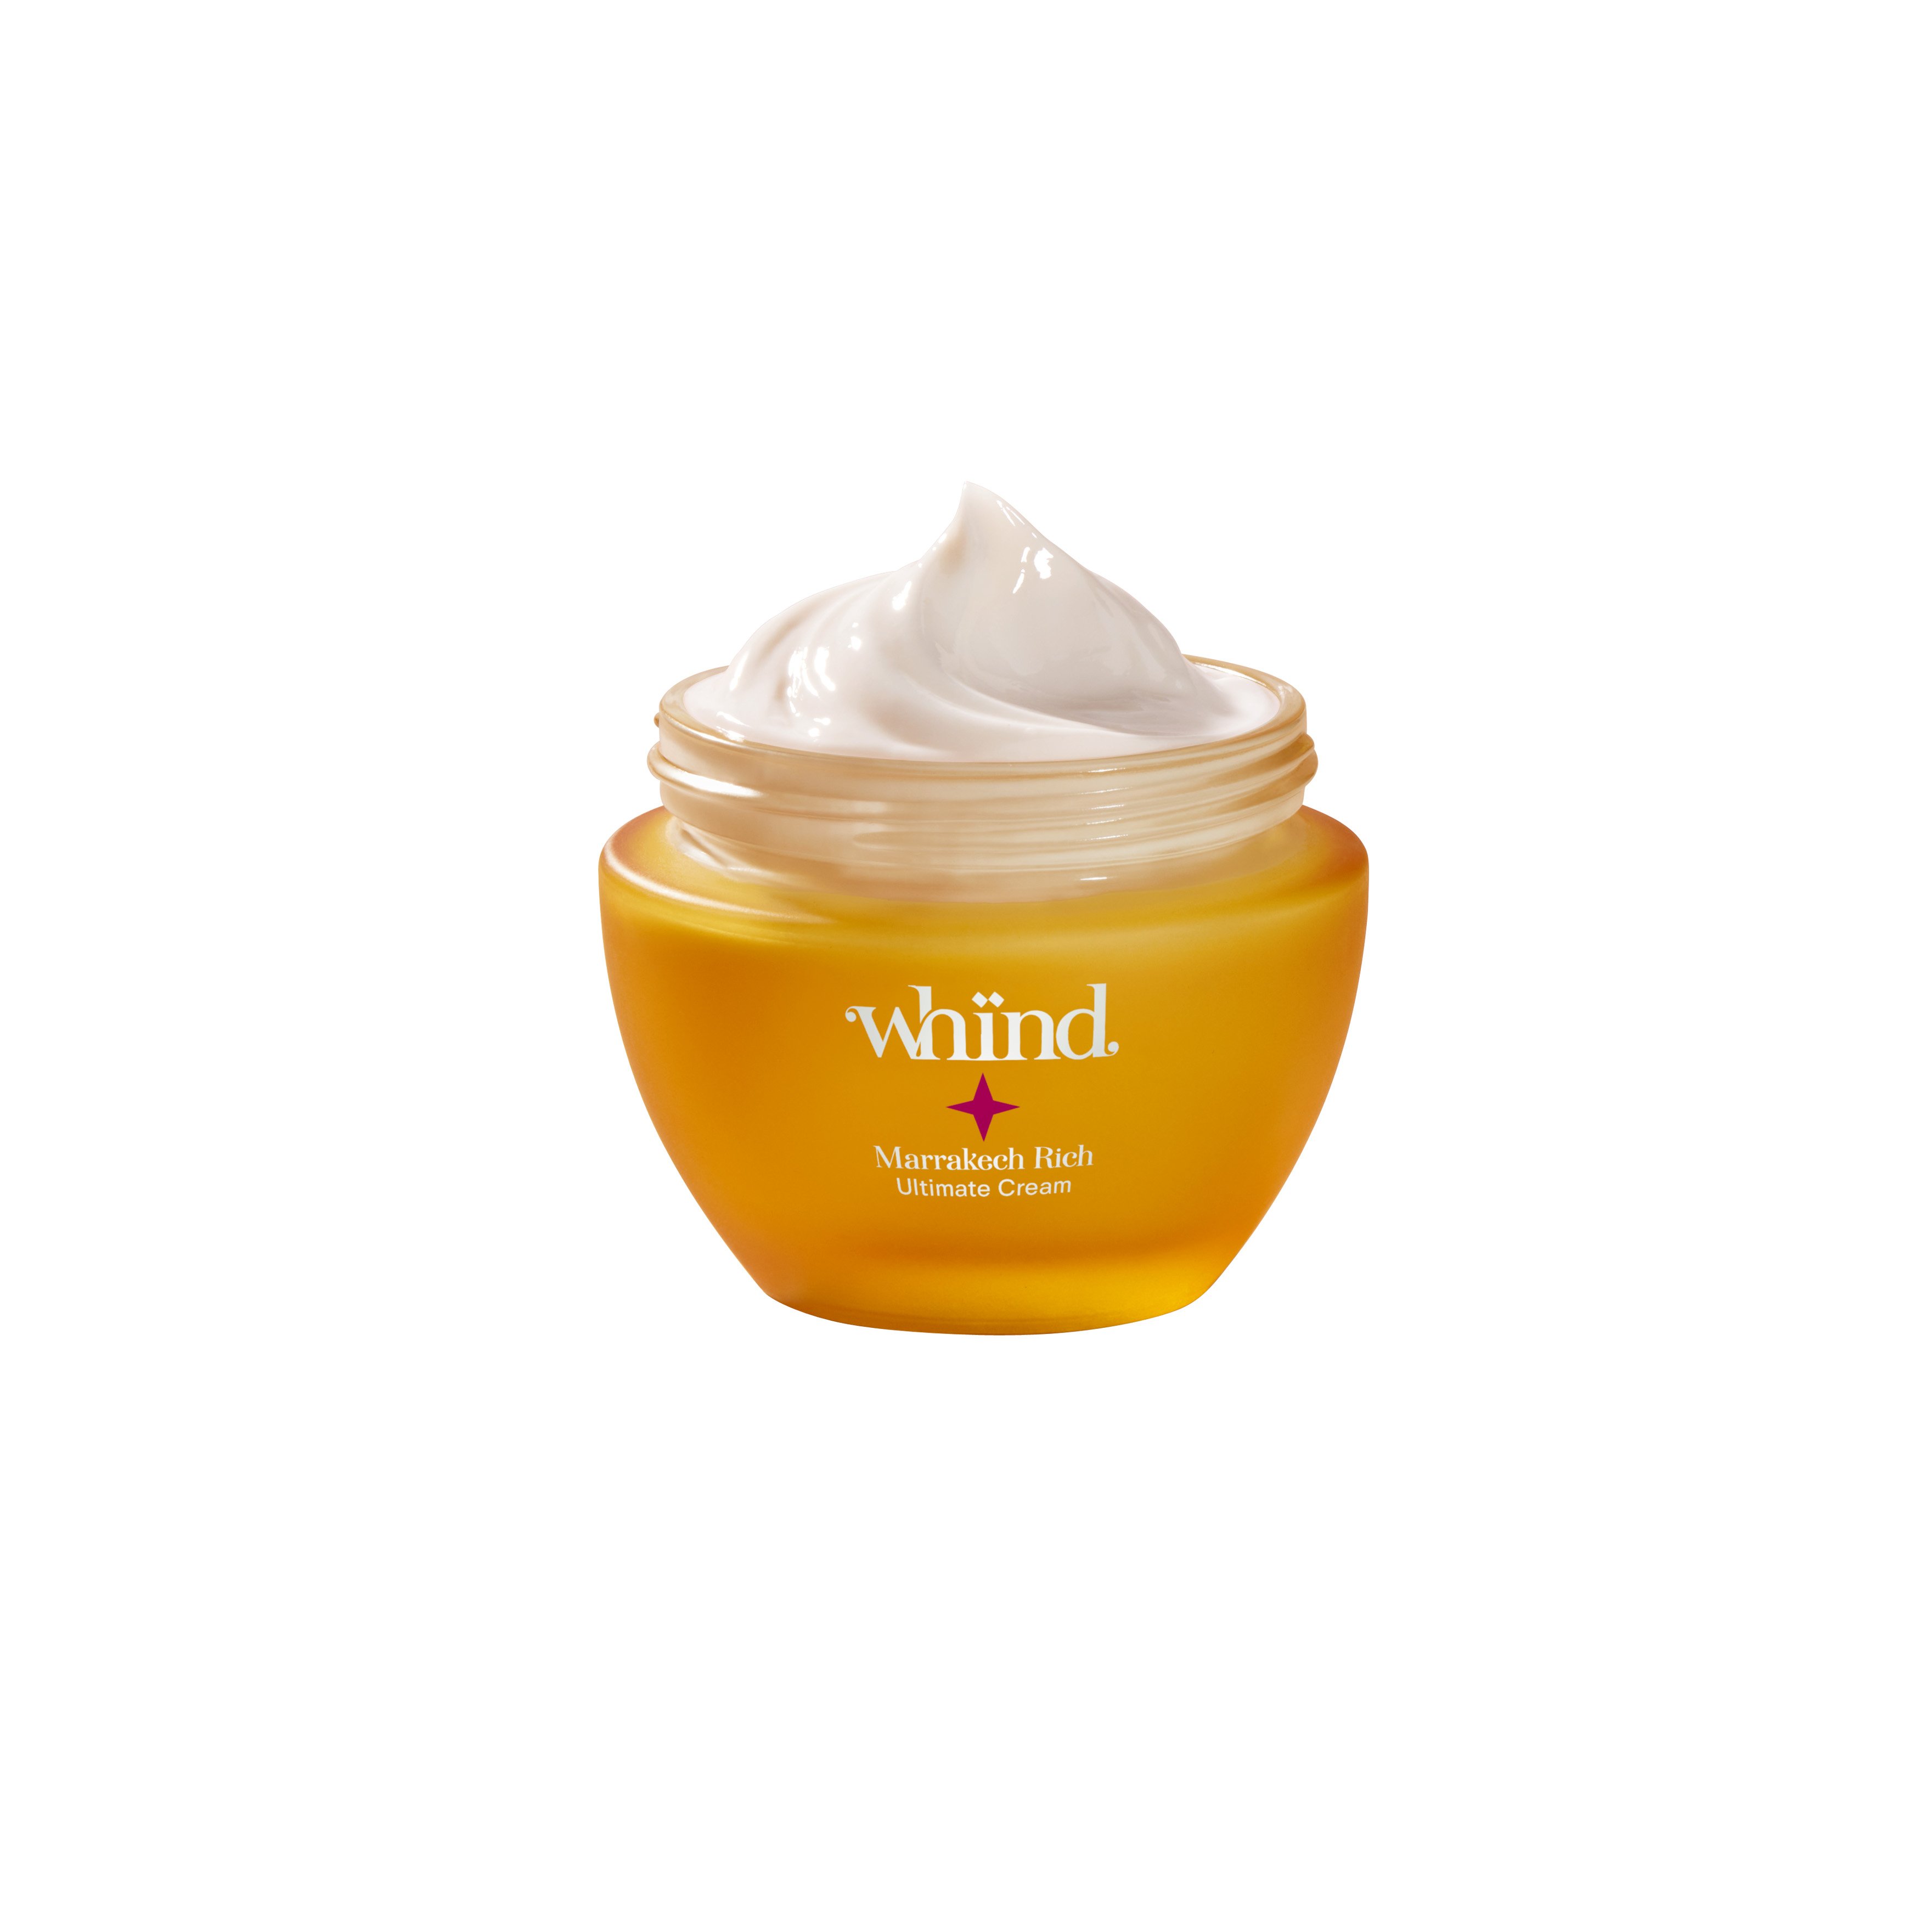 whind تطلق مستحضر Marrakech Rich Ultimate Cream الجديد